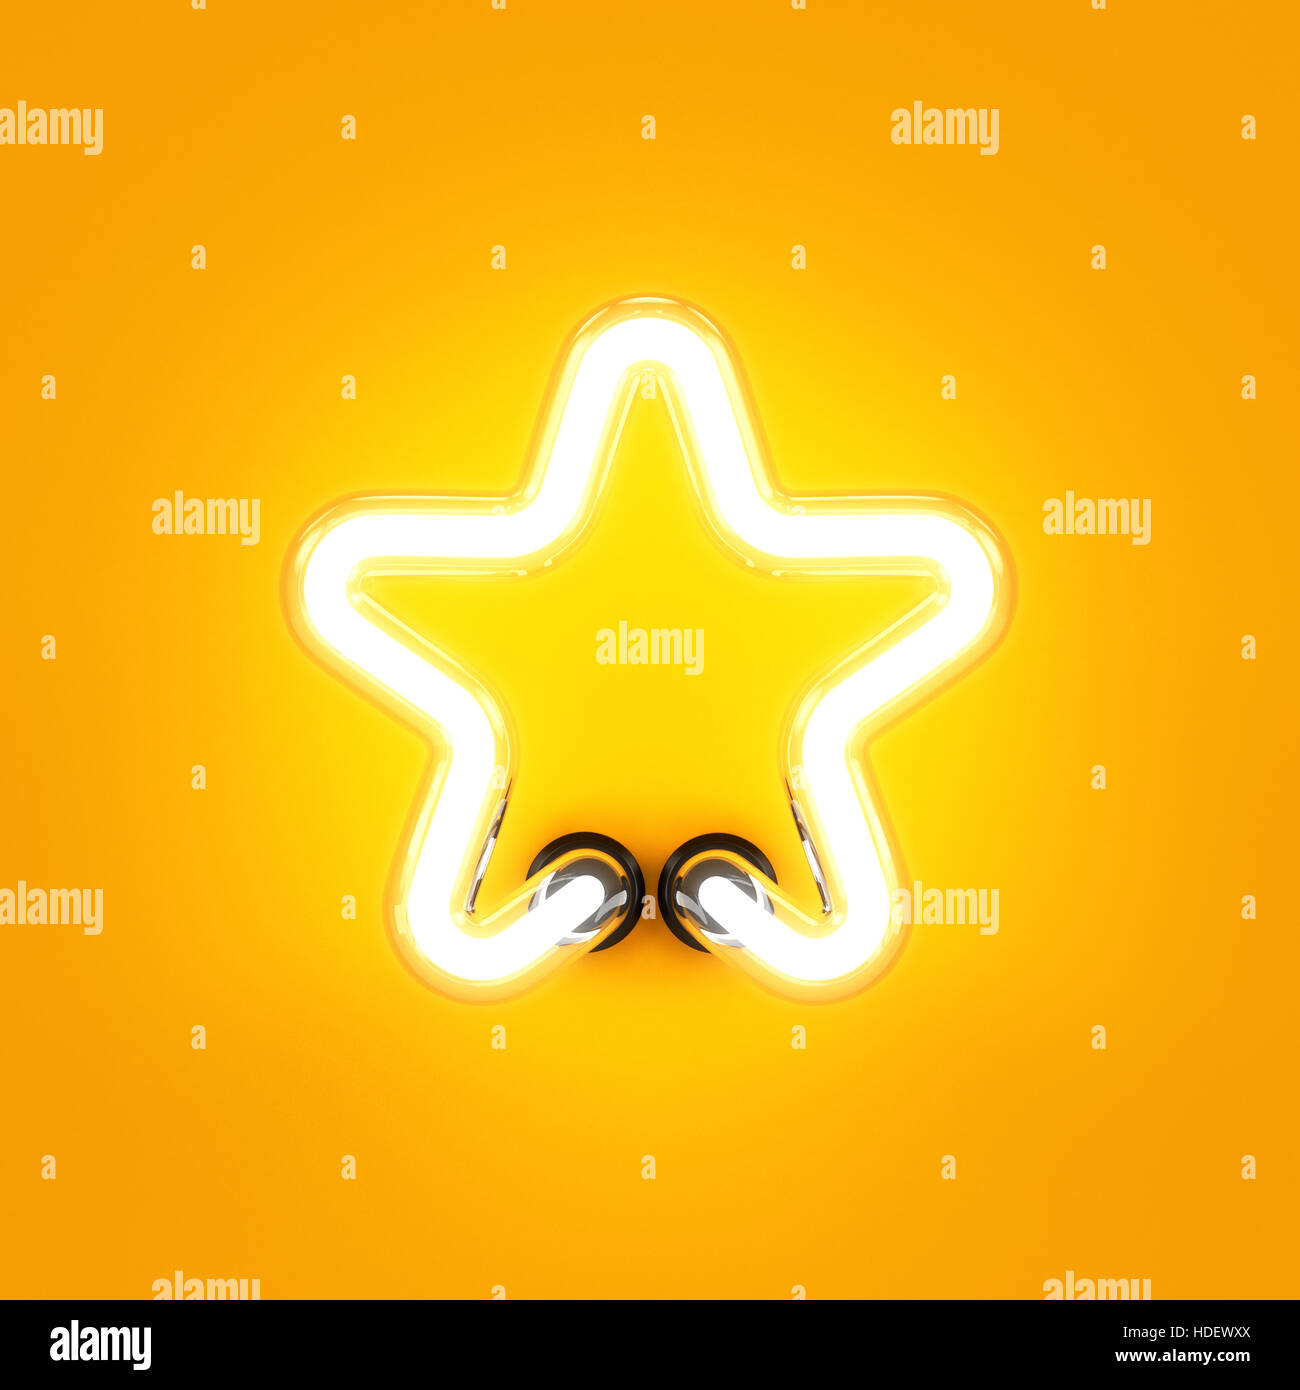 Neon light alphabet character star font. Neon tube letter glow effect on orange background. 3d rendering Stock Photo